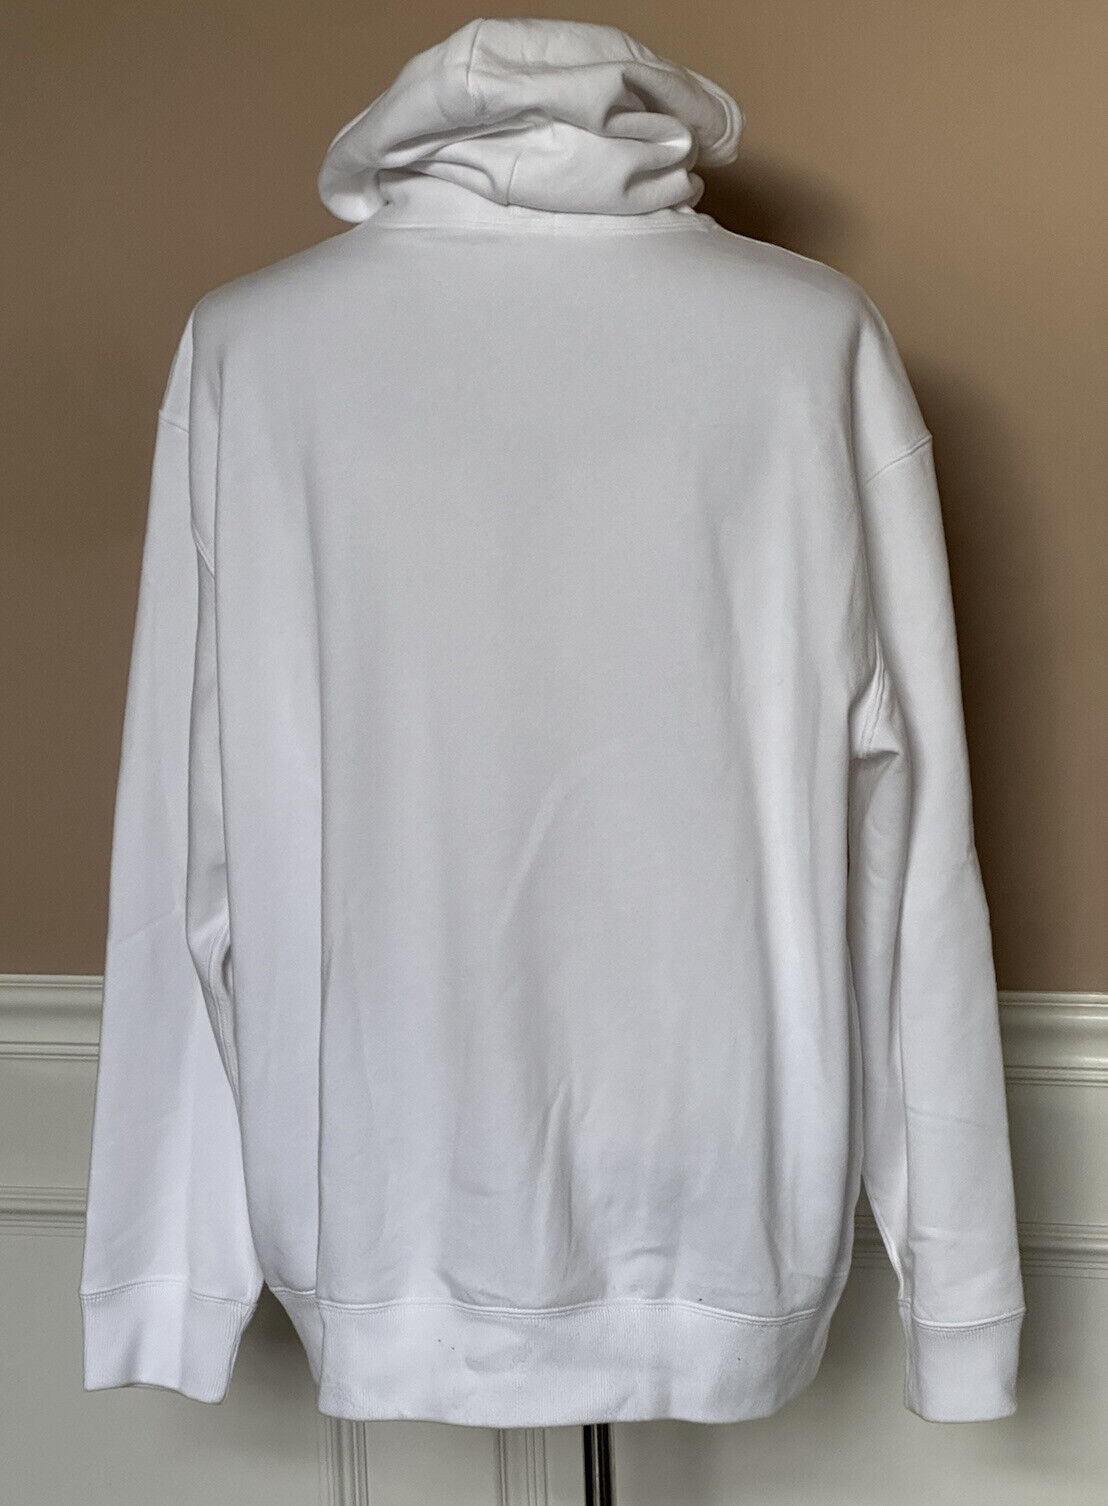 NWT $188 Polo Ralph Lauren Bear Sweatshirt with Hoodie White 3XLT/3TGL